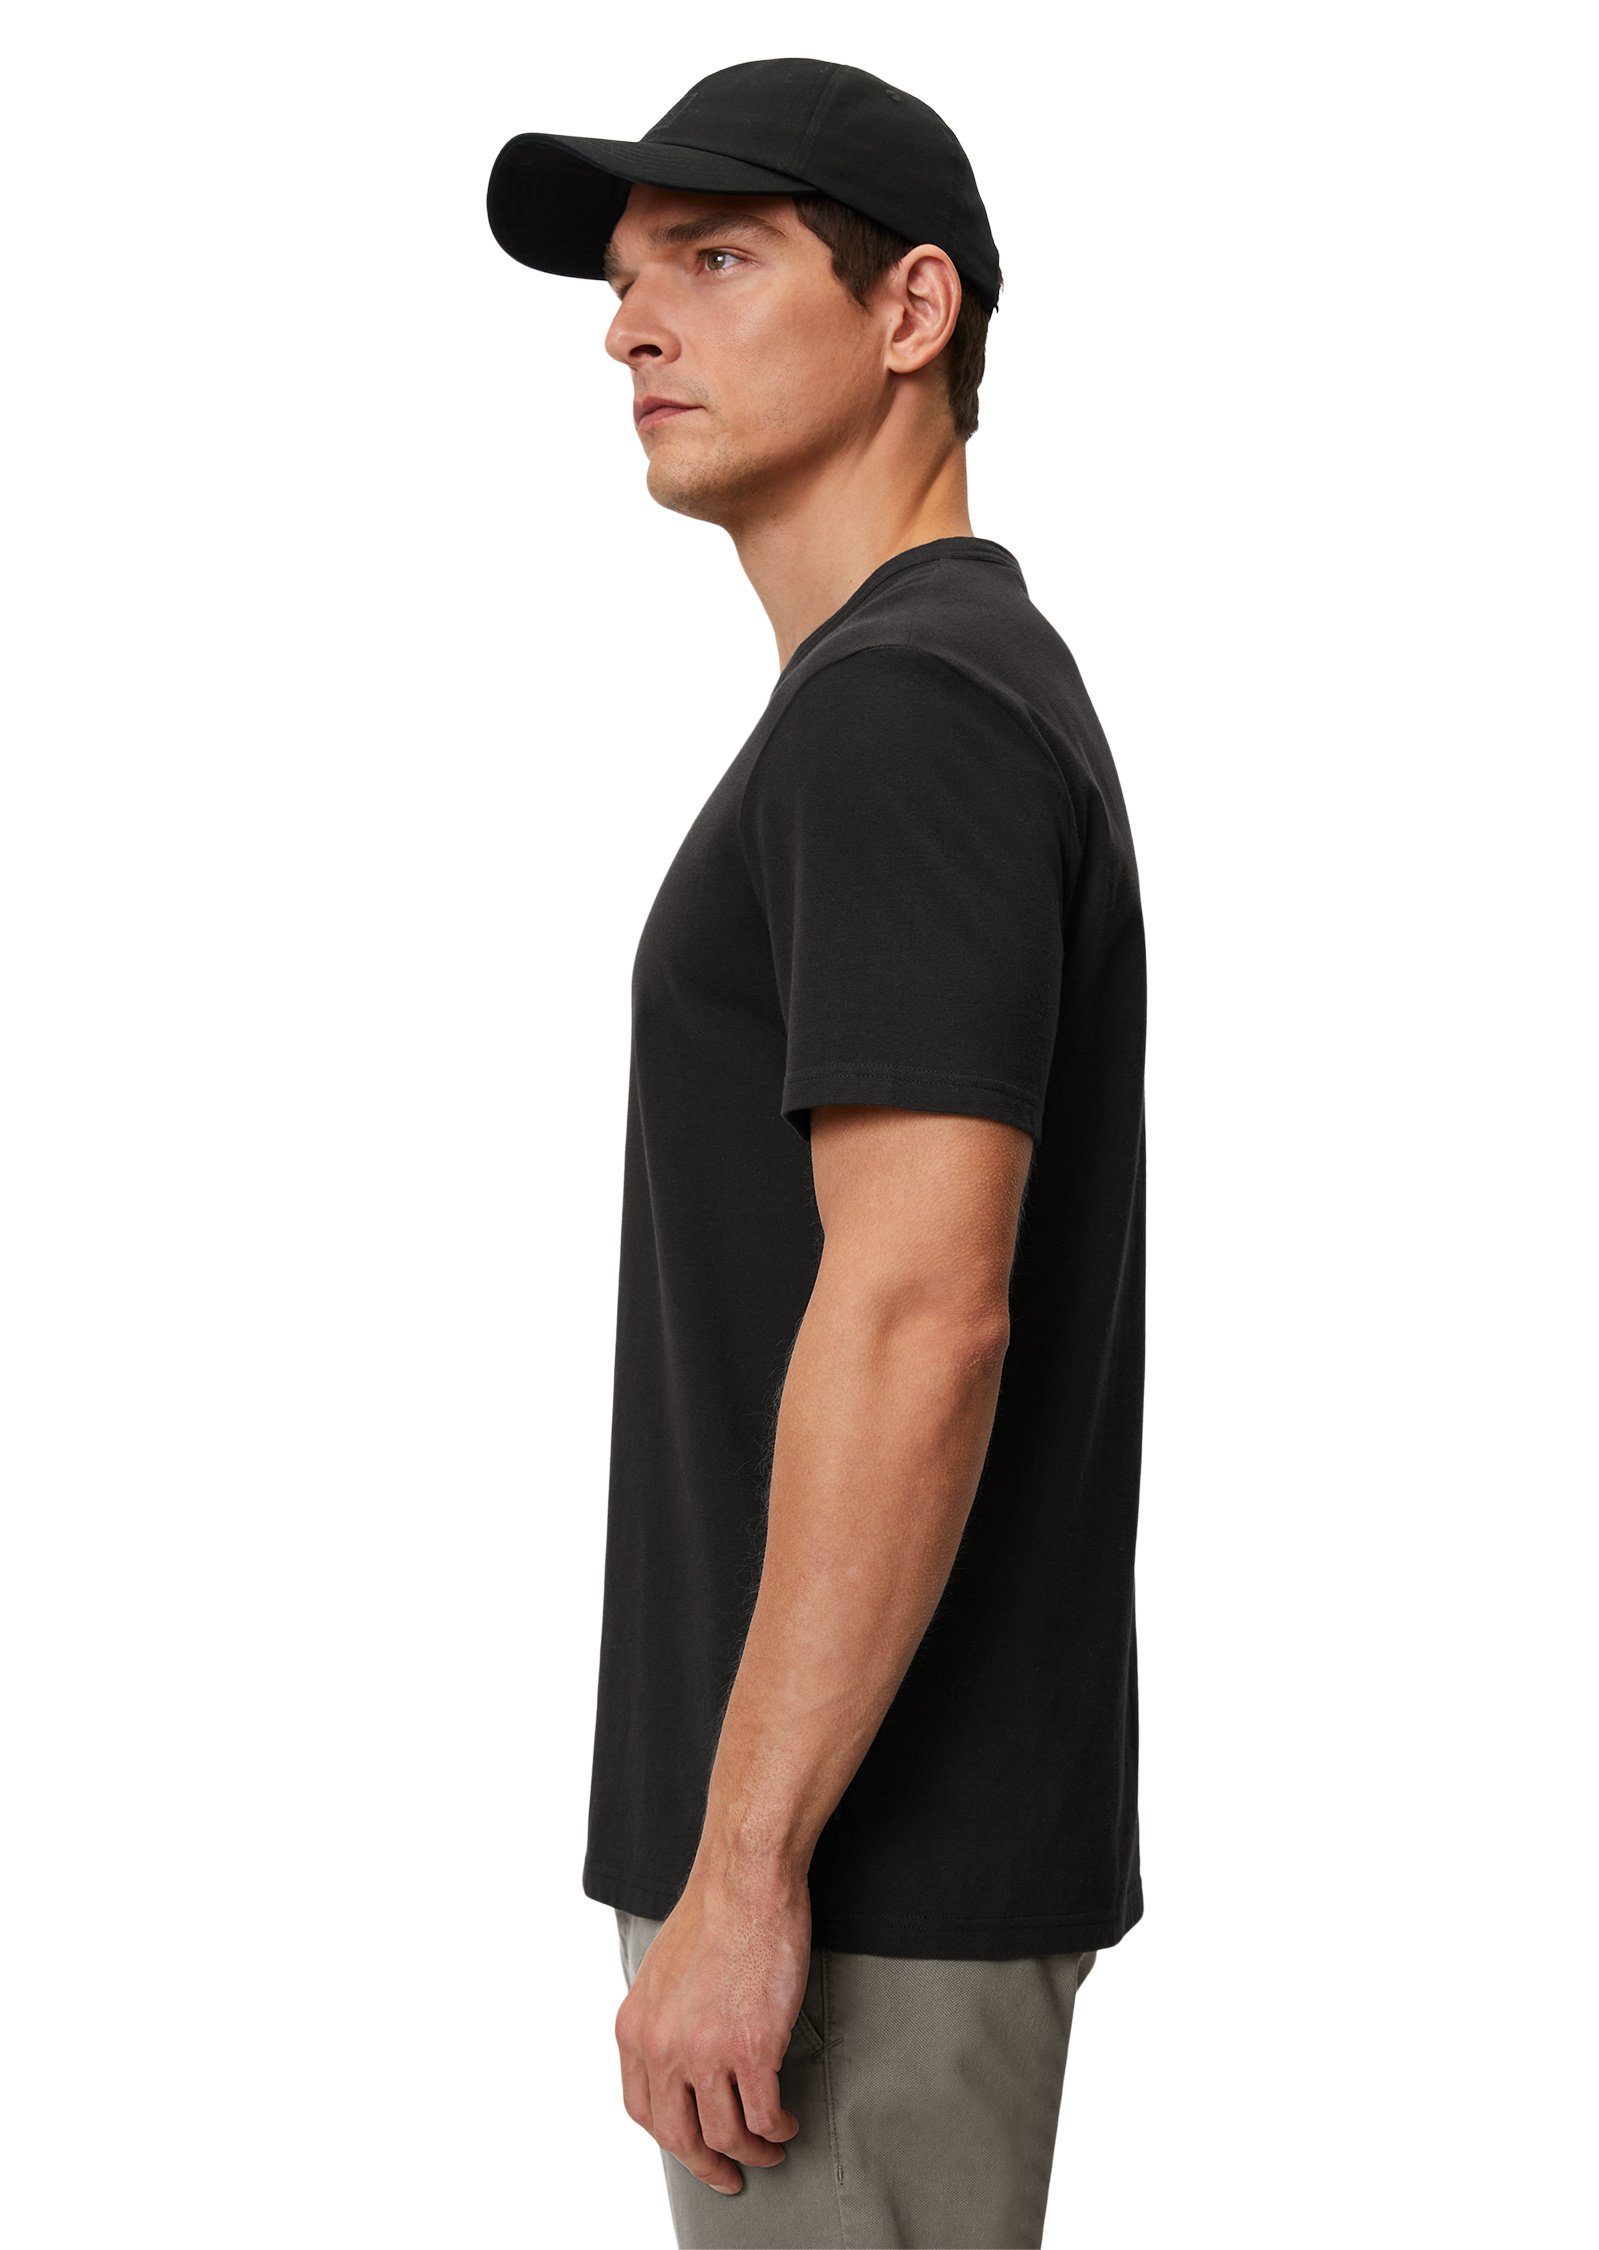 Marc O'Polo T-Shirt hochwertiger Baumwolle schwarz aus